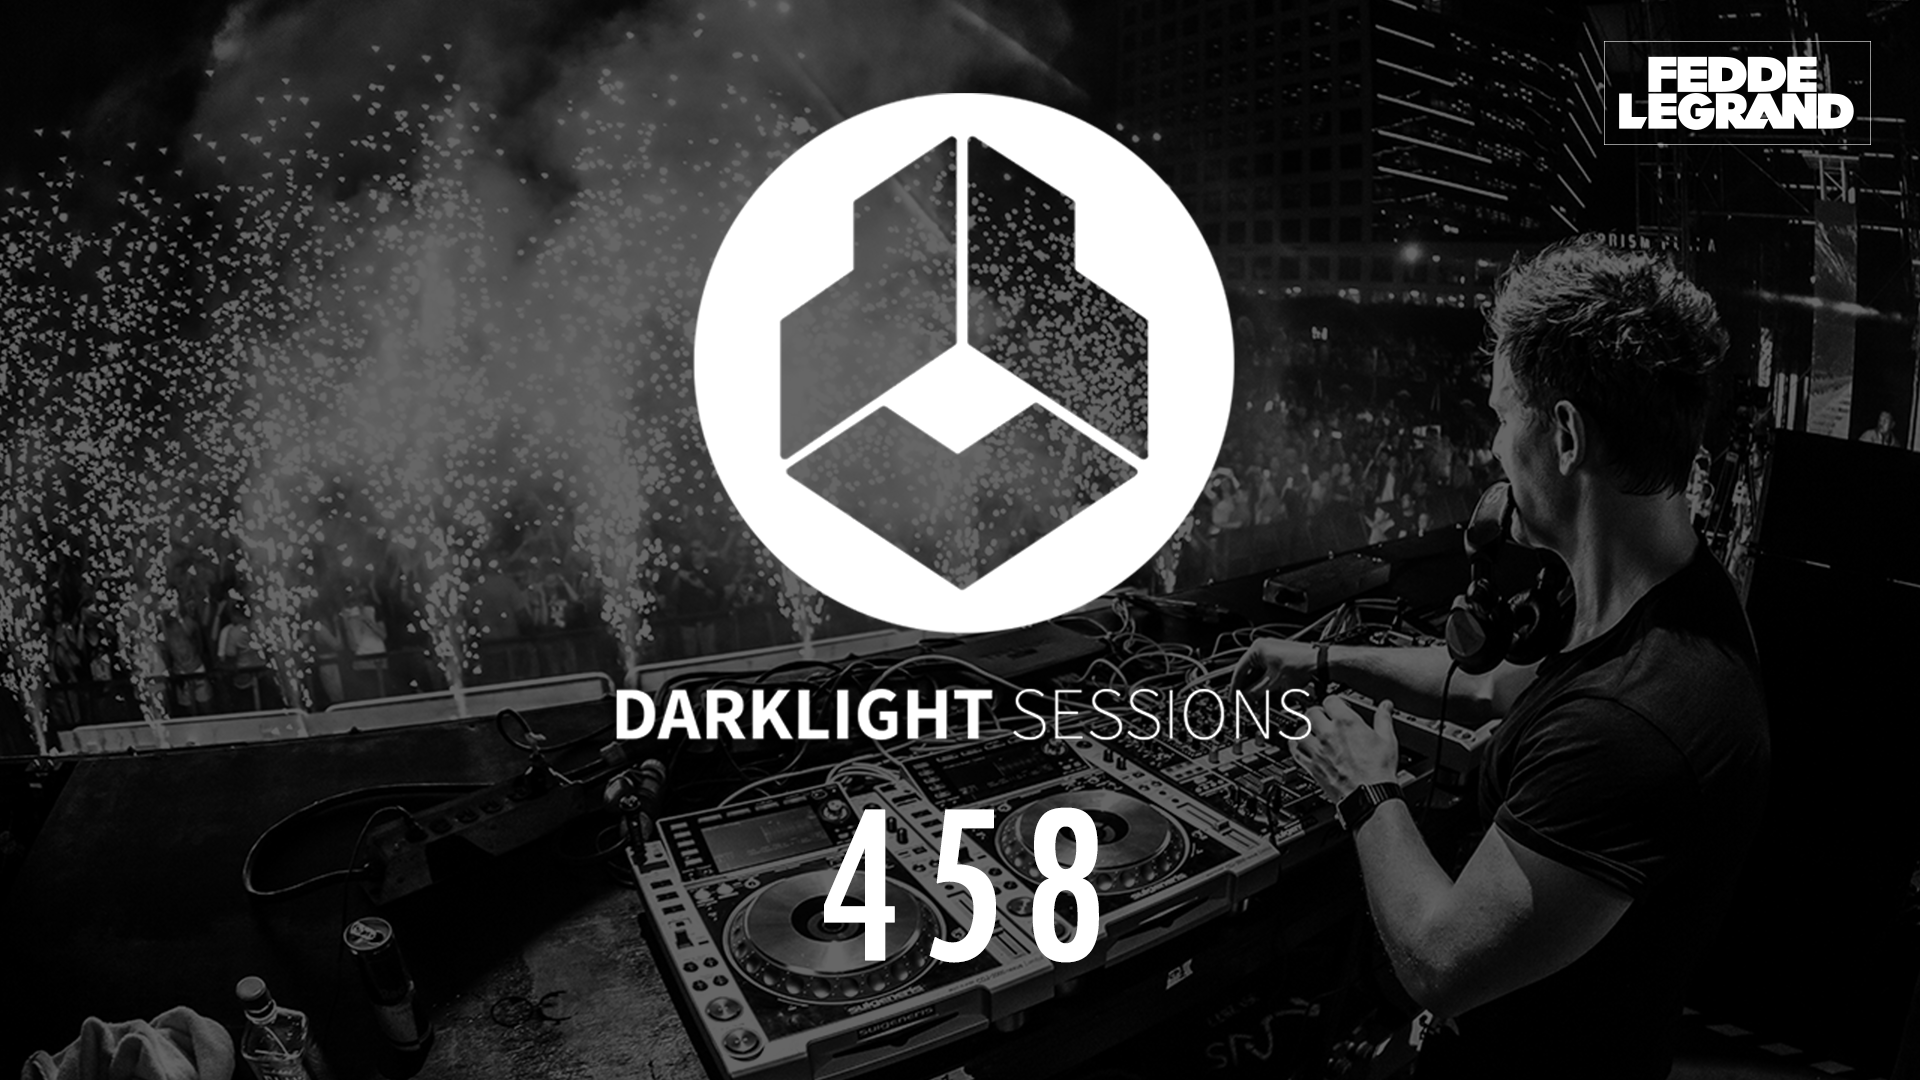 Darklight Sessions 458